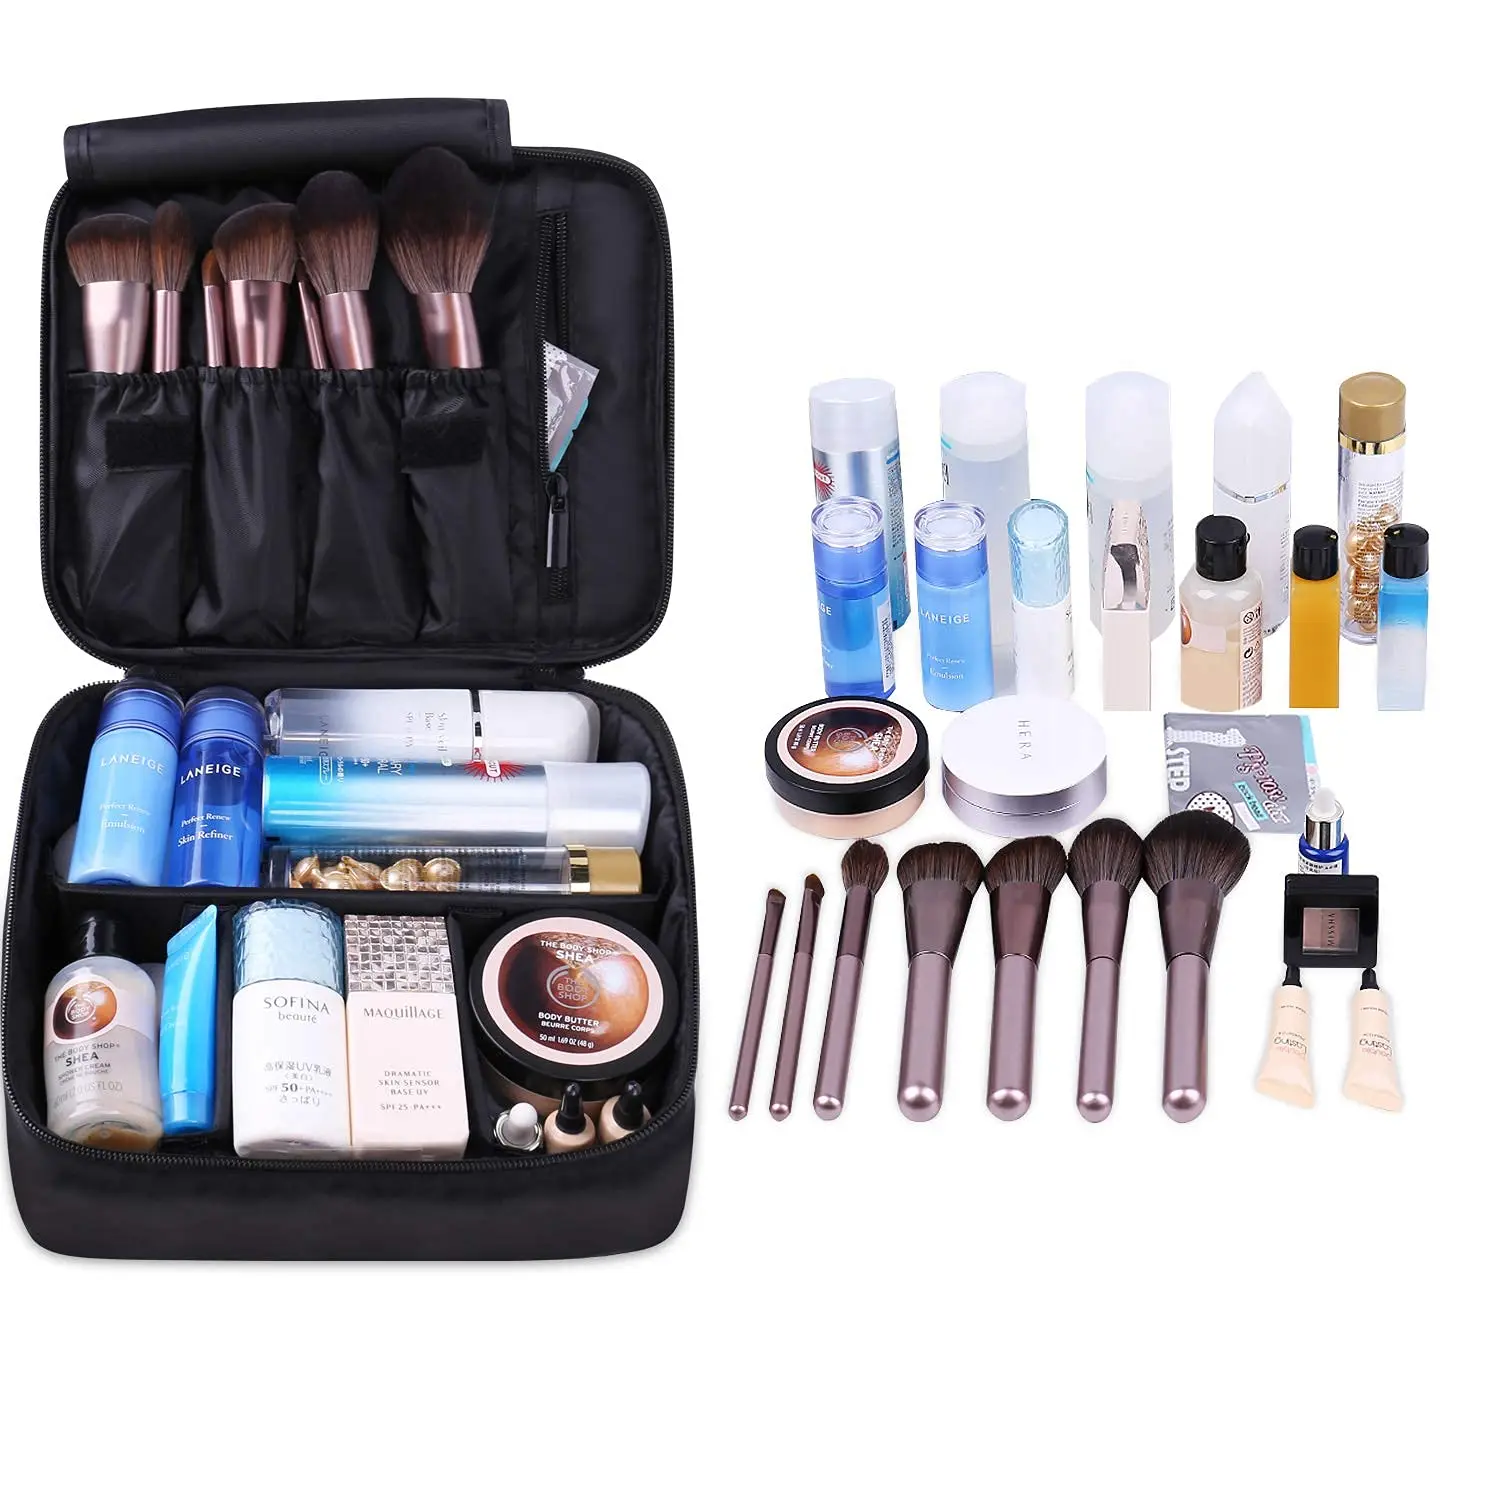 Source Fashion Ladies Toilet Travel Makeup Bag Large Nylon Cosmetic Bag  Make up Case Organizer for Women and Girls on m.